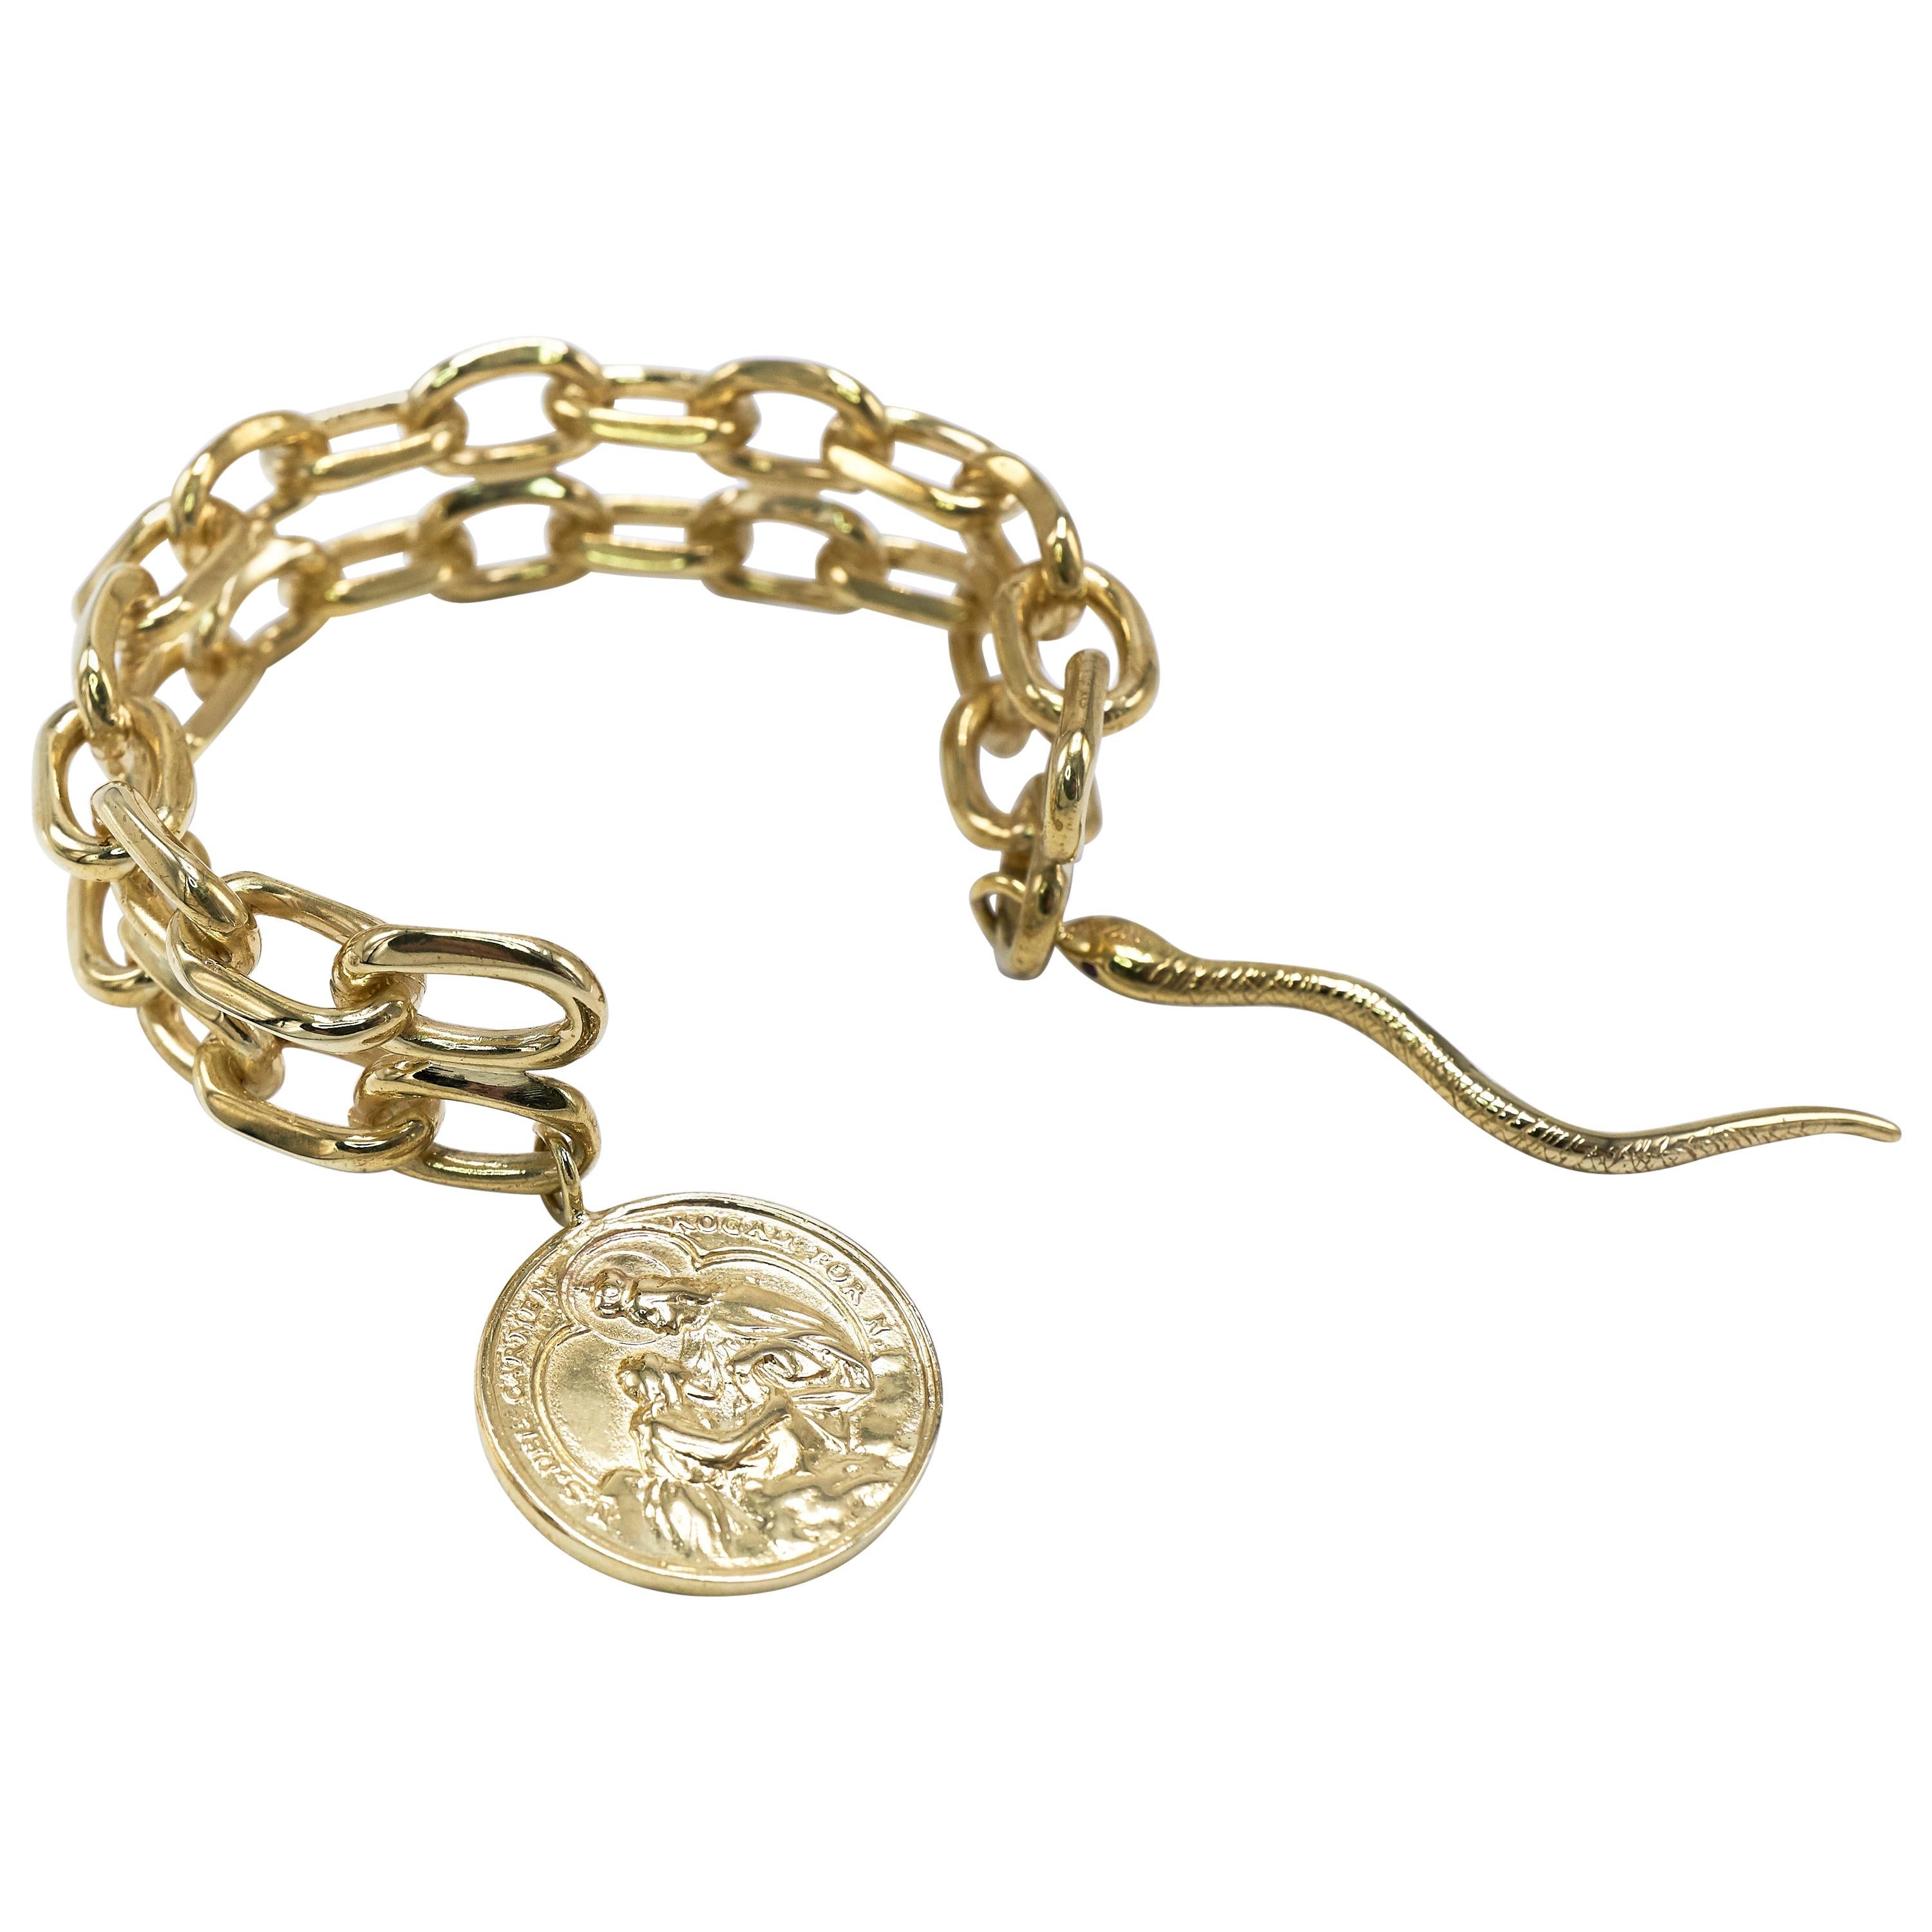 Statement Chain Cuff Bangle Bracelet Virgin Mary Medal Snake J Dauphin

J DAUPHIN 